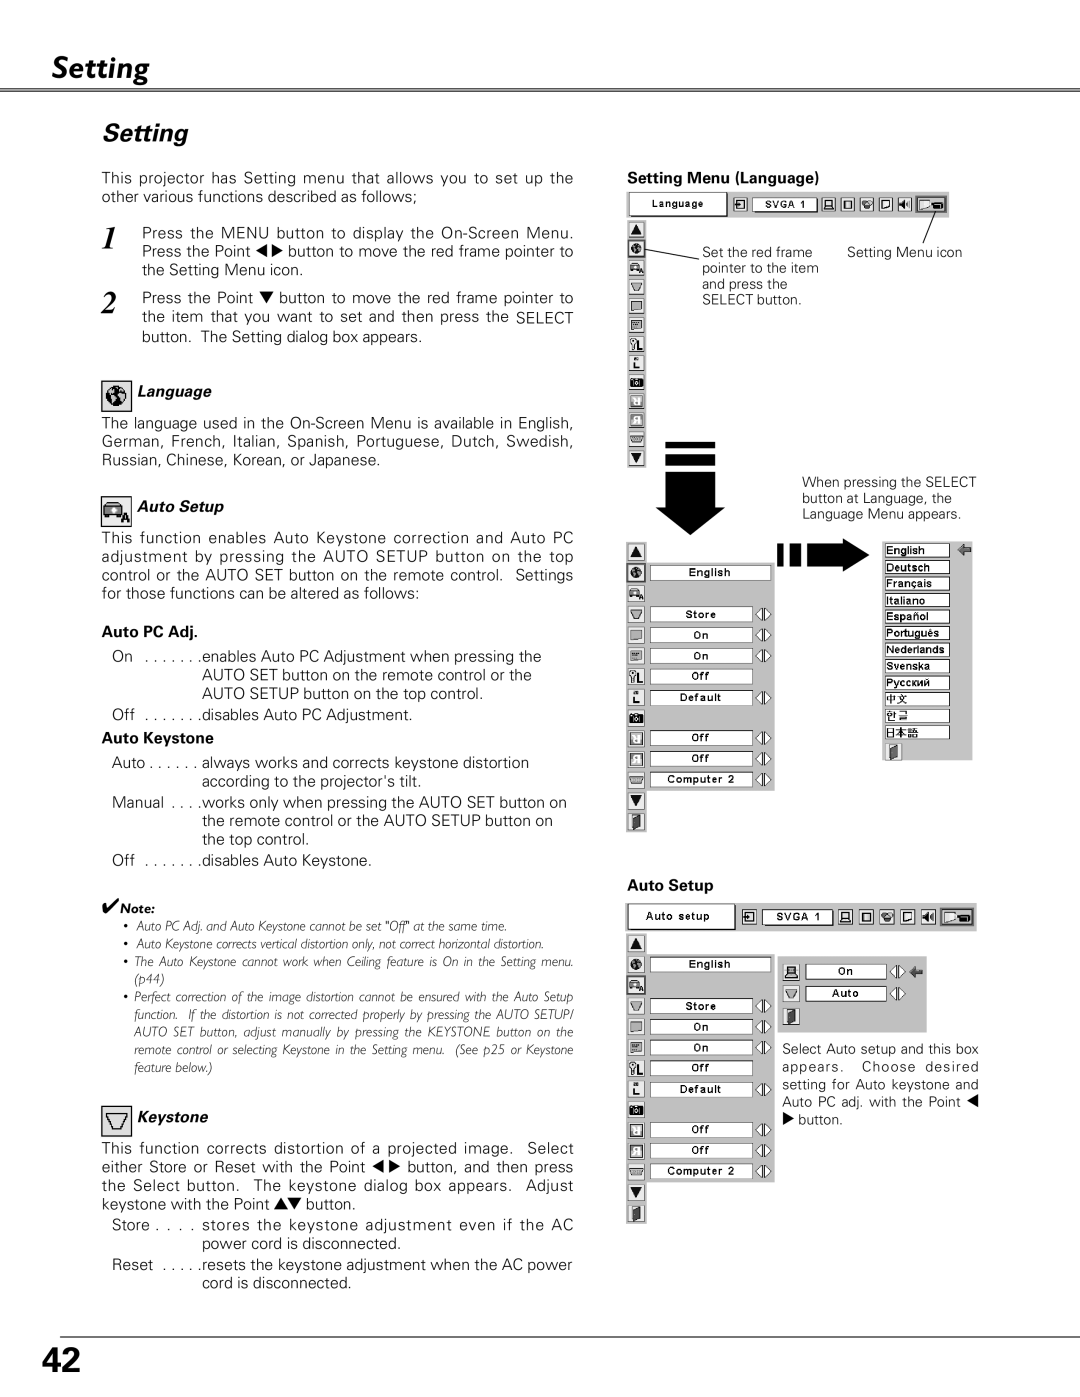 Eiki LC-XB26, LC-XB21 owner manual Auto Setup, Auto PC Adj, Auto Keystone, Setting Menu Language 